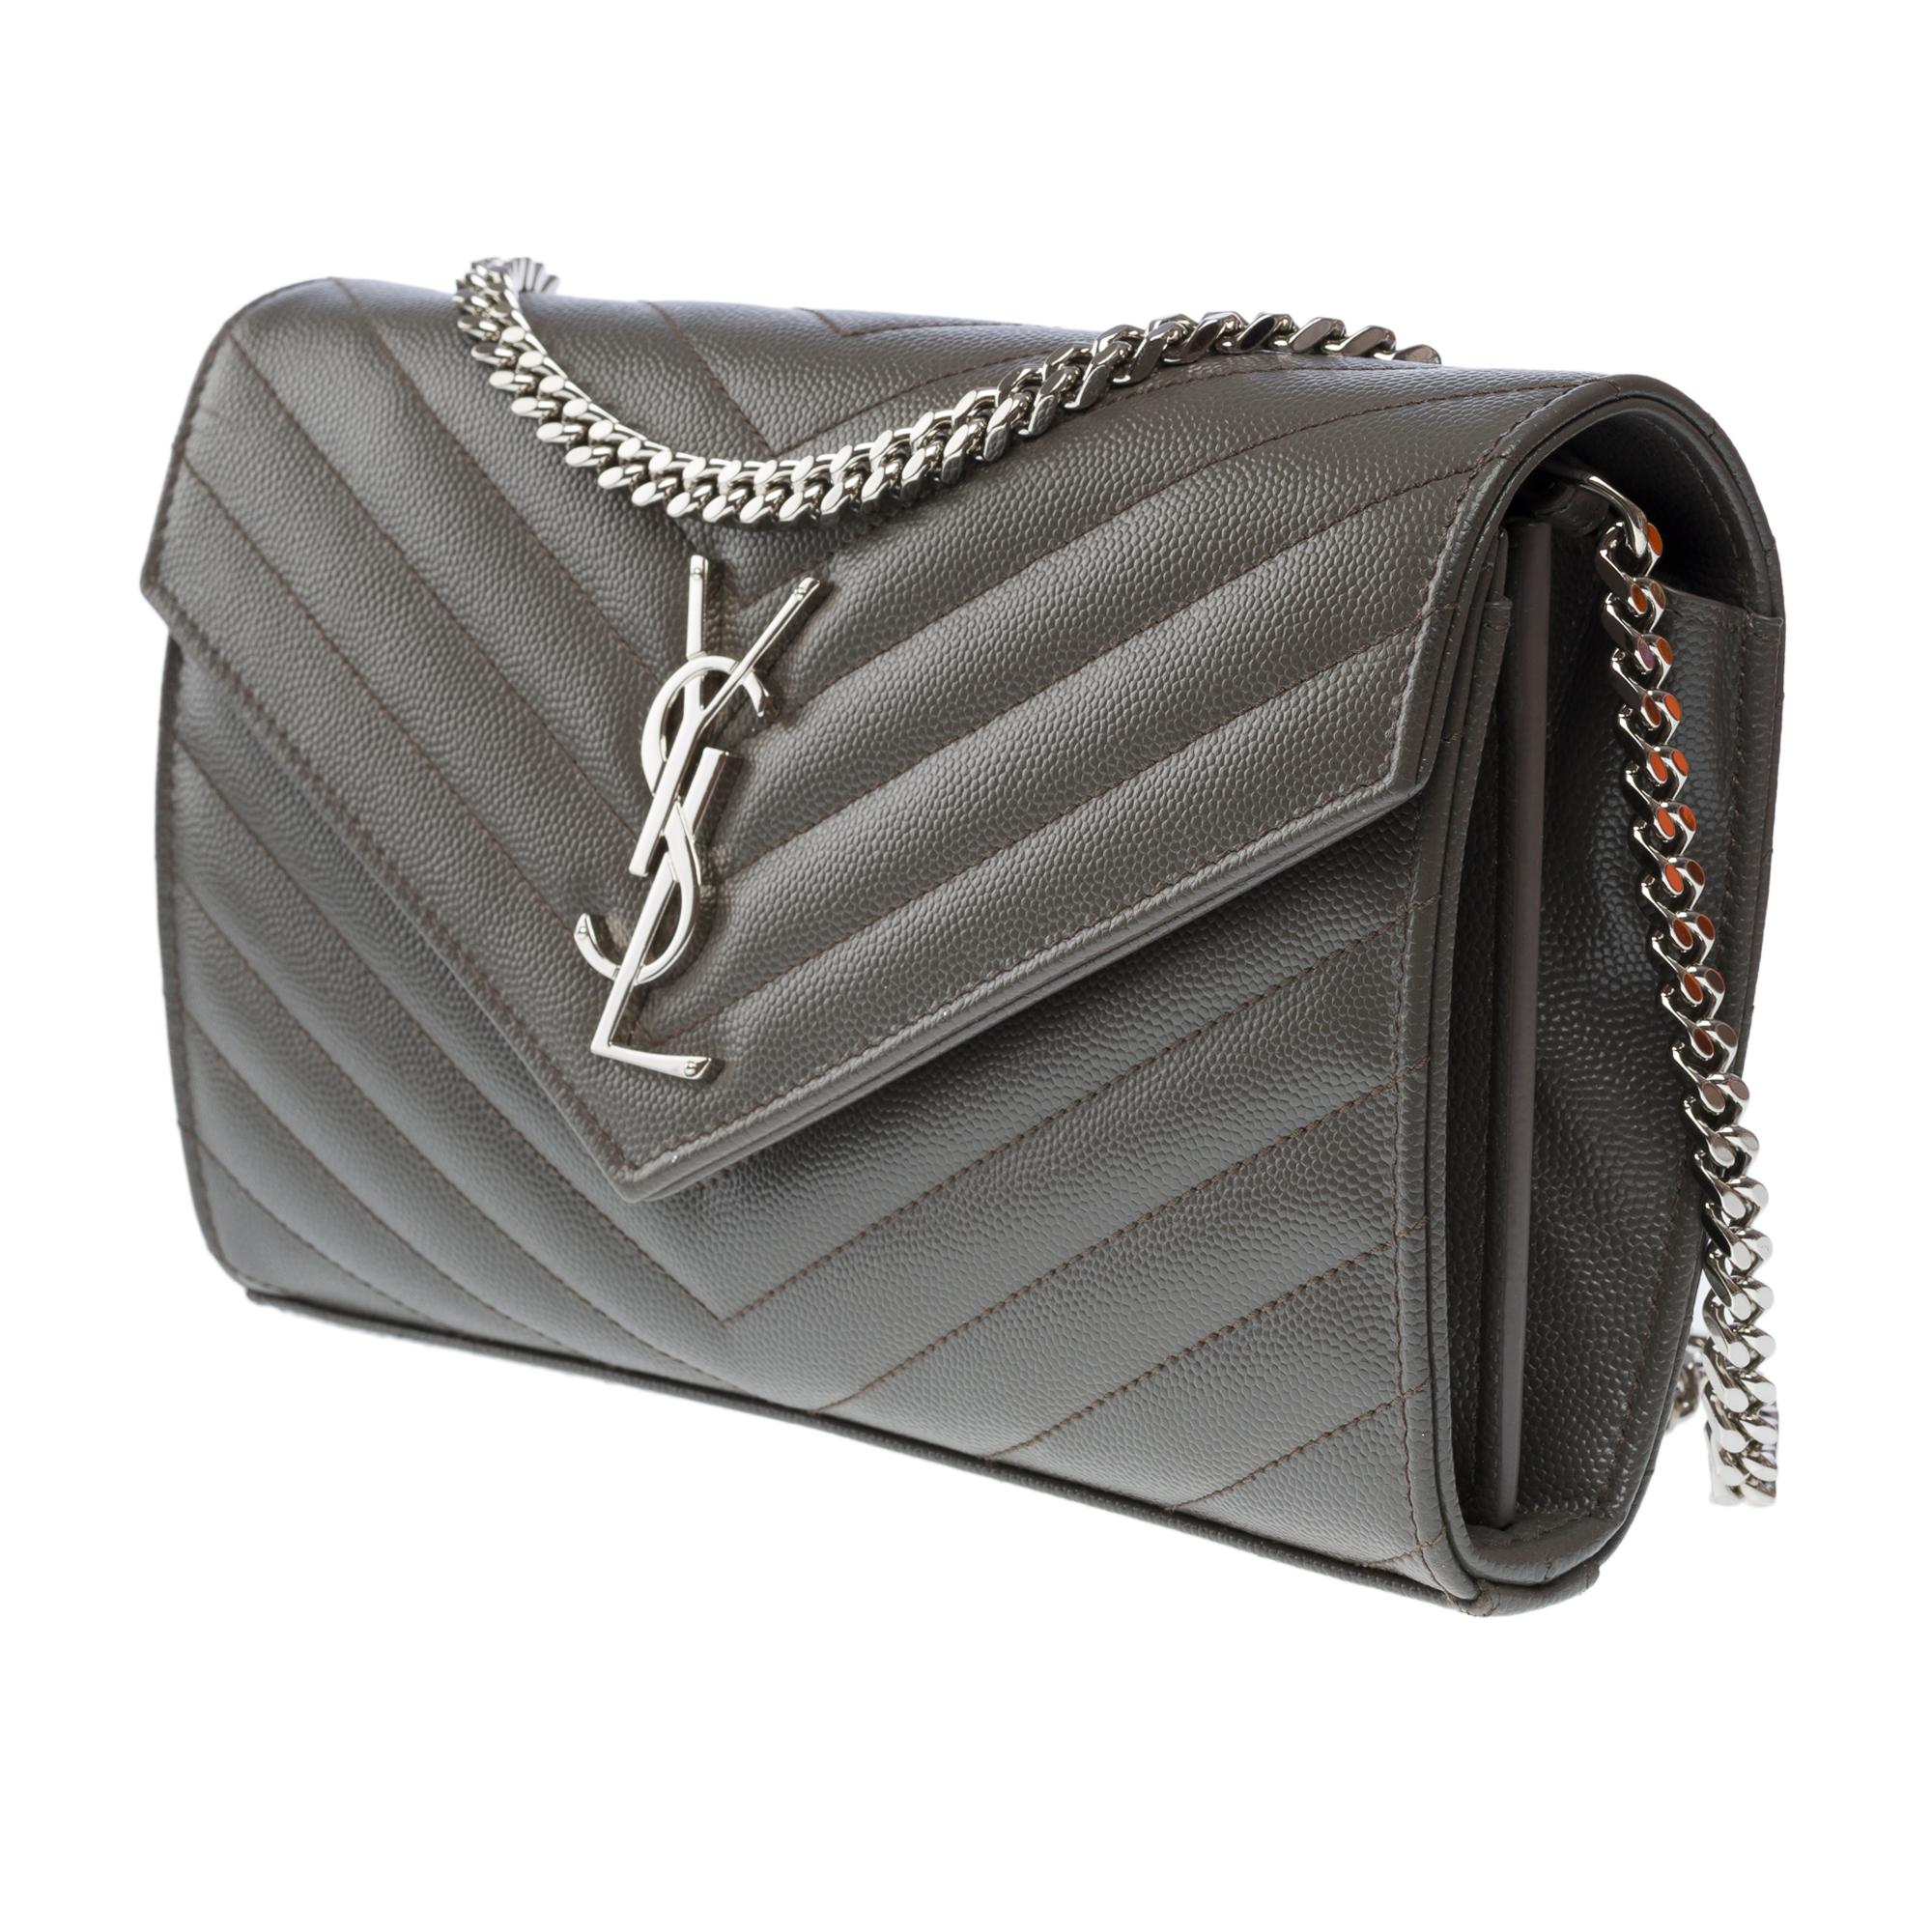 New YSL Pochette Cassandre classic shoulder bag in Grey leather, SHW For Sale 2